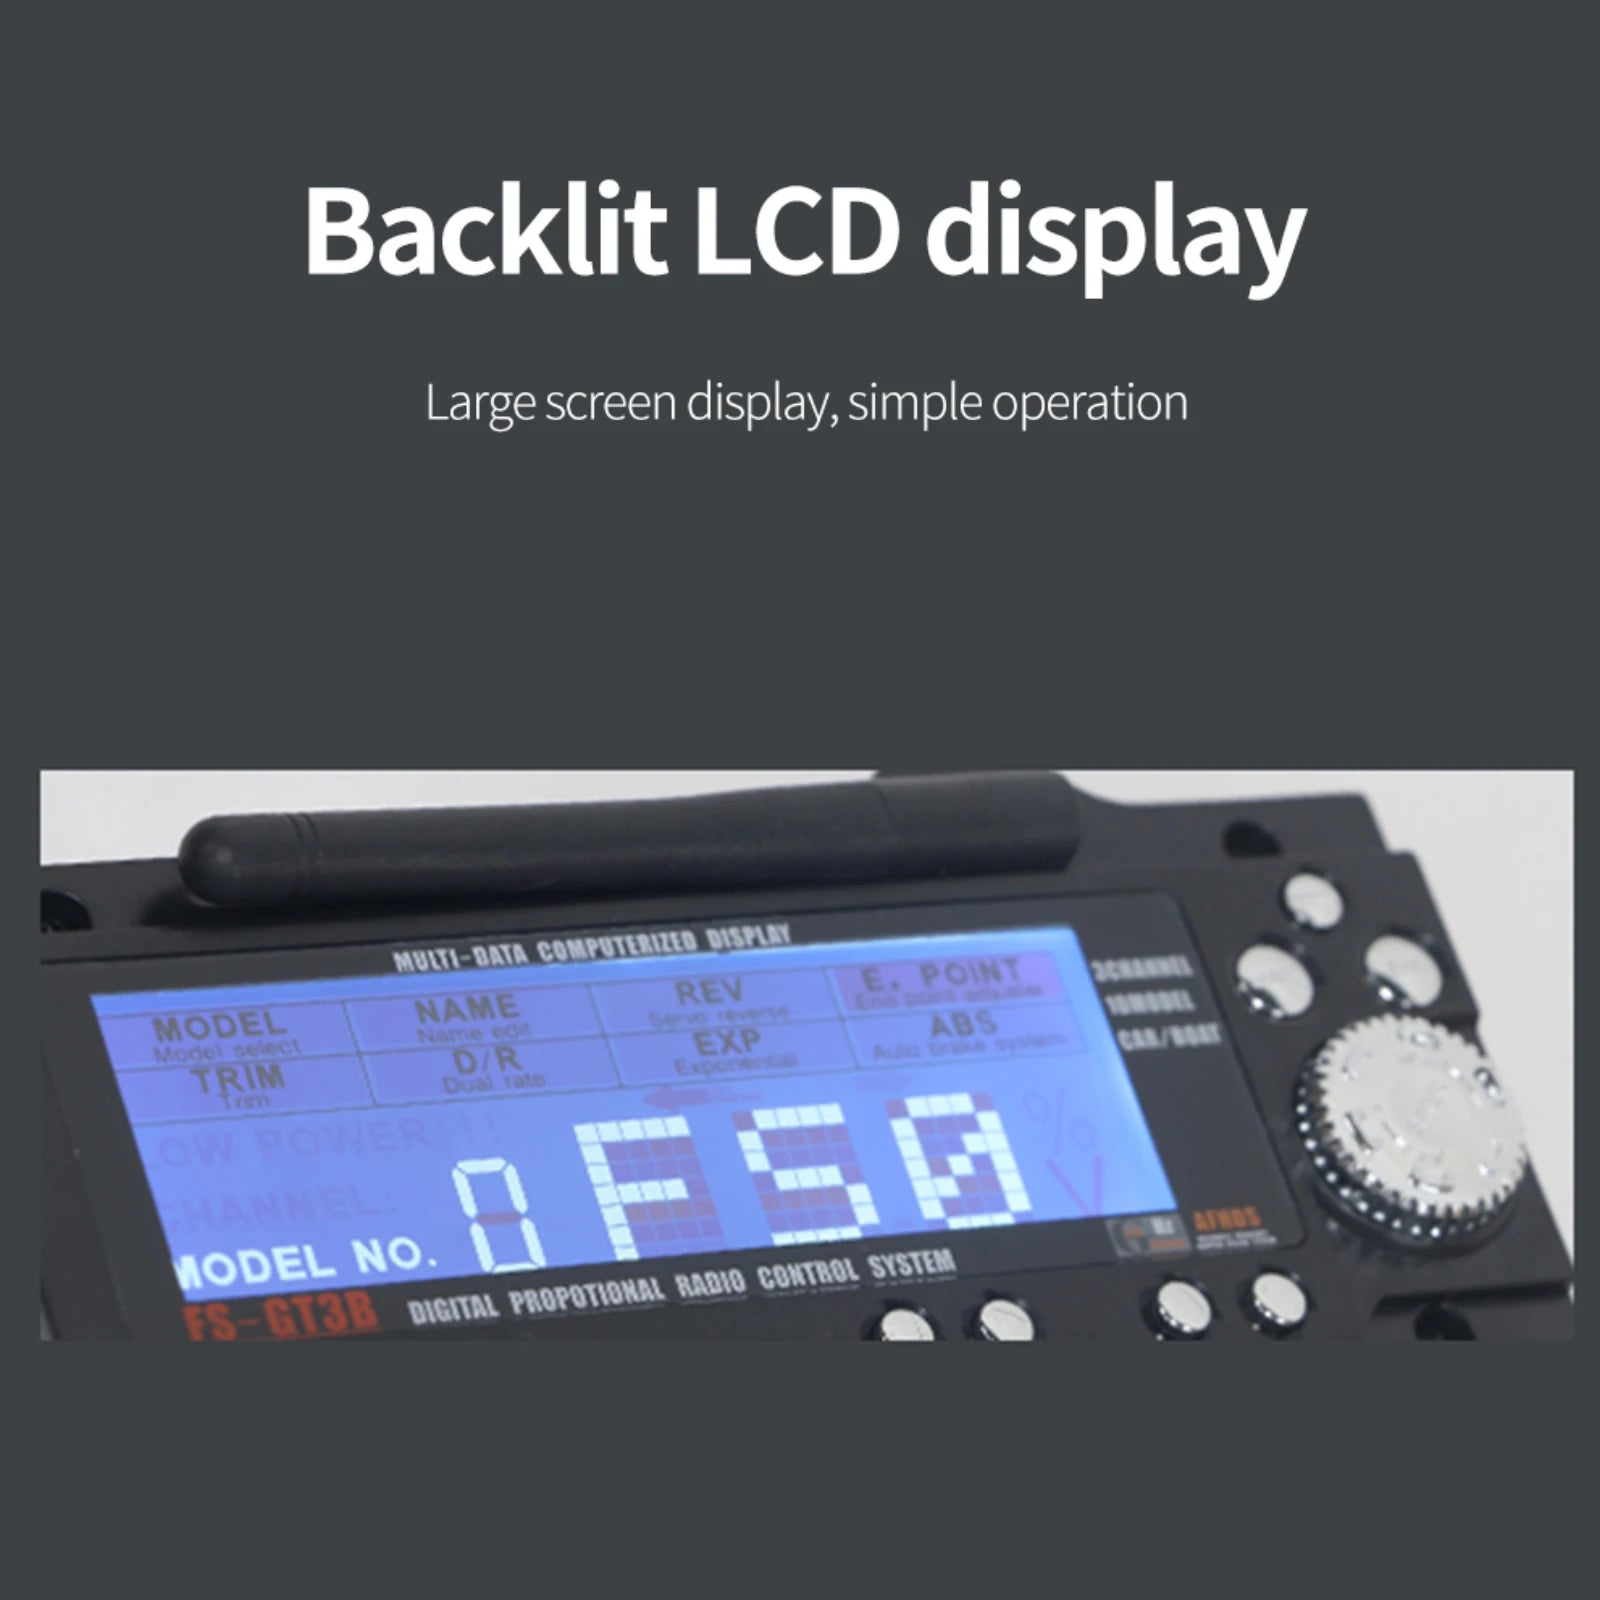 backlit LCD display Large screen display,simple operation Muttf - QATA